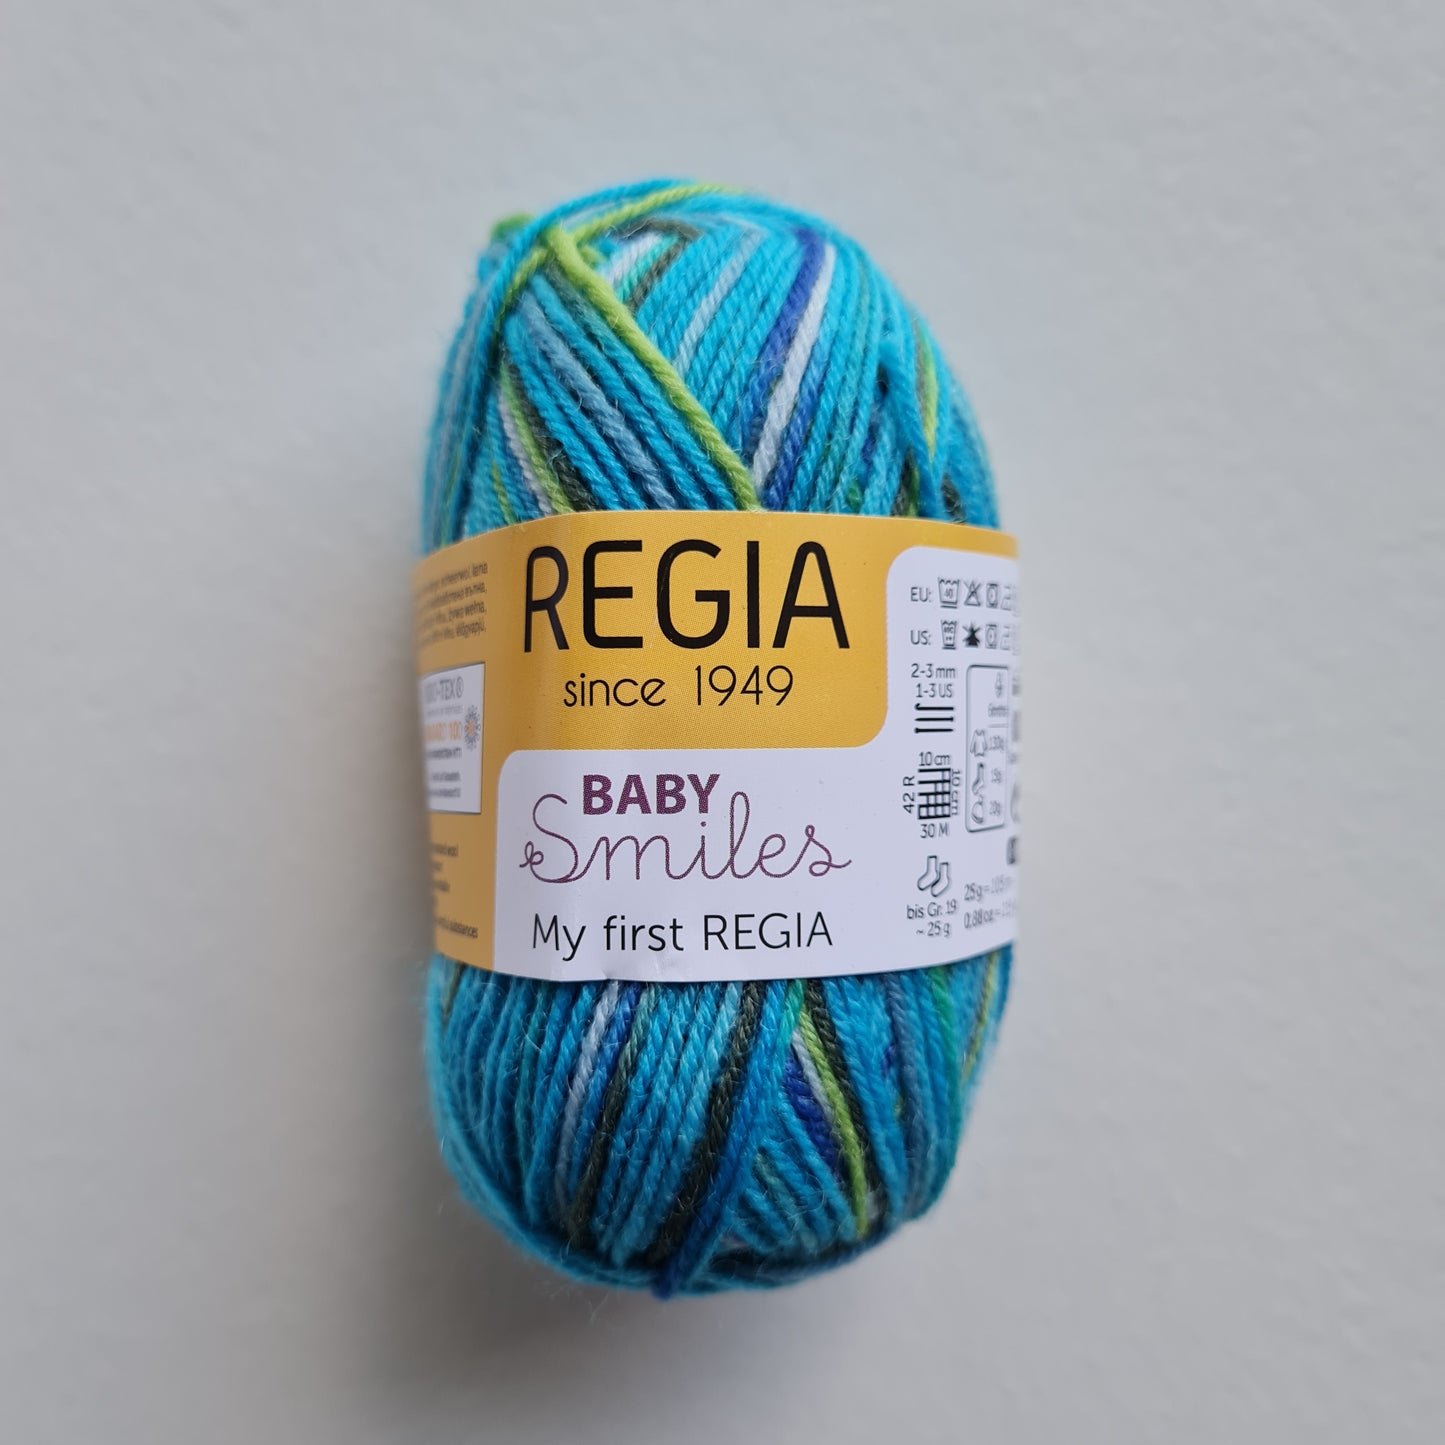 Regia Baby Smiles my first Regia 25g  wool yarn Marco 01819